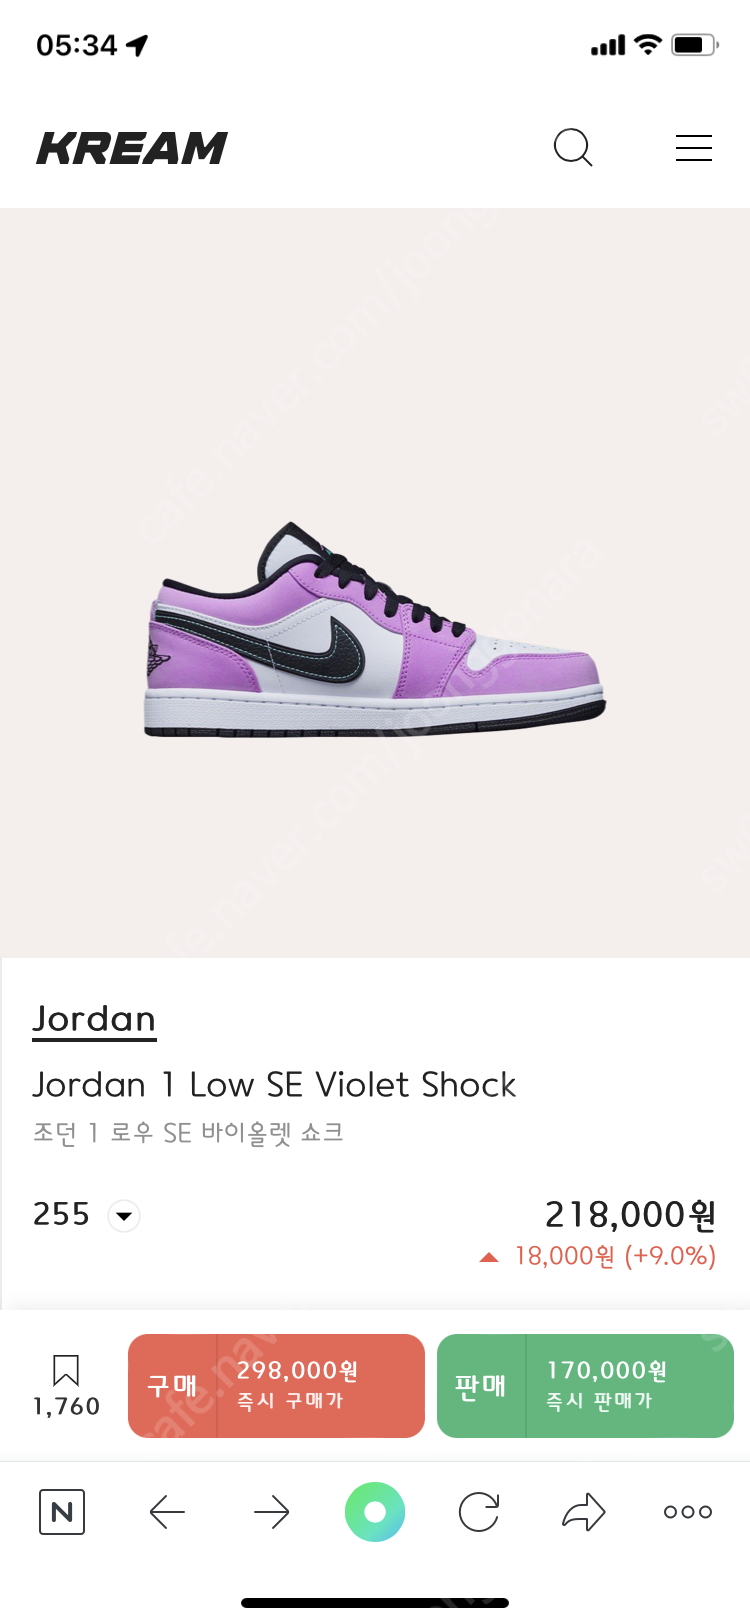 Jordan 1 Low SE Violet Shock 255 판매